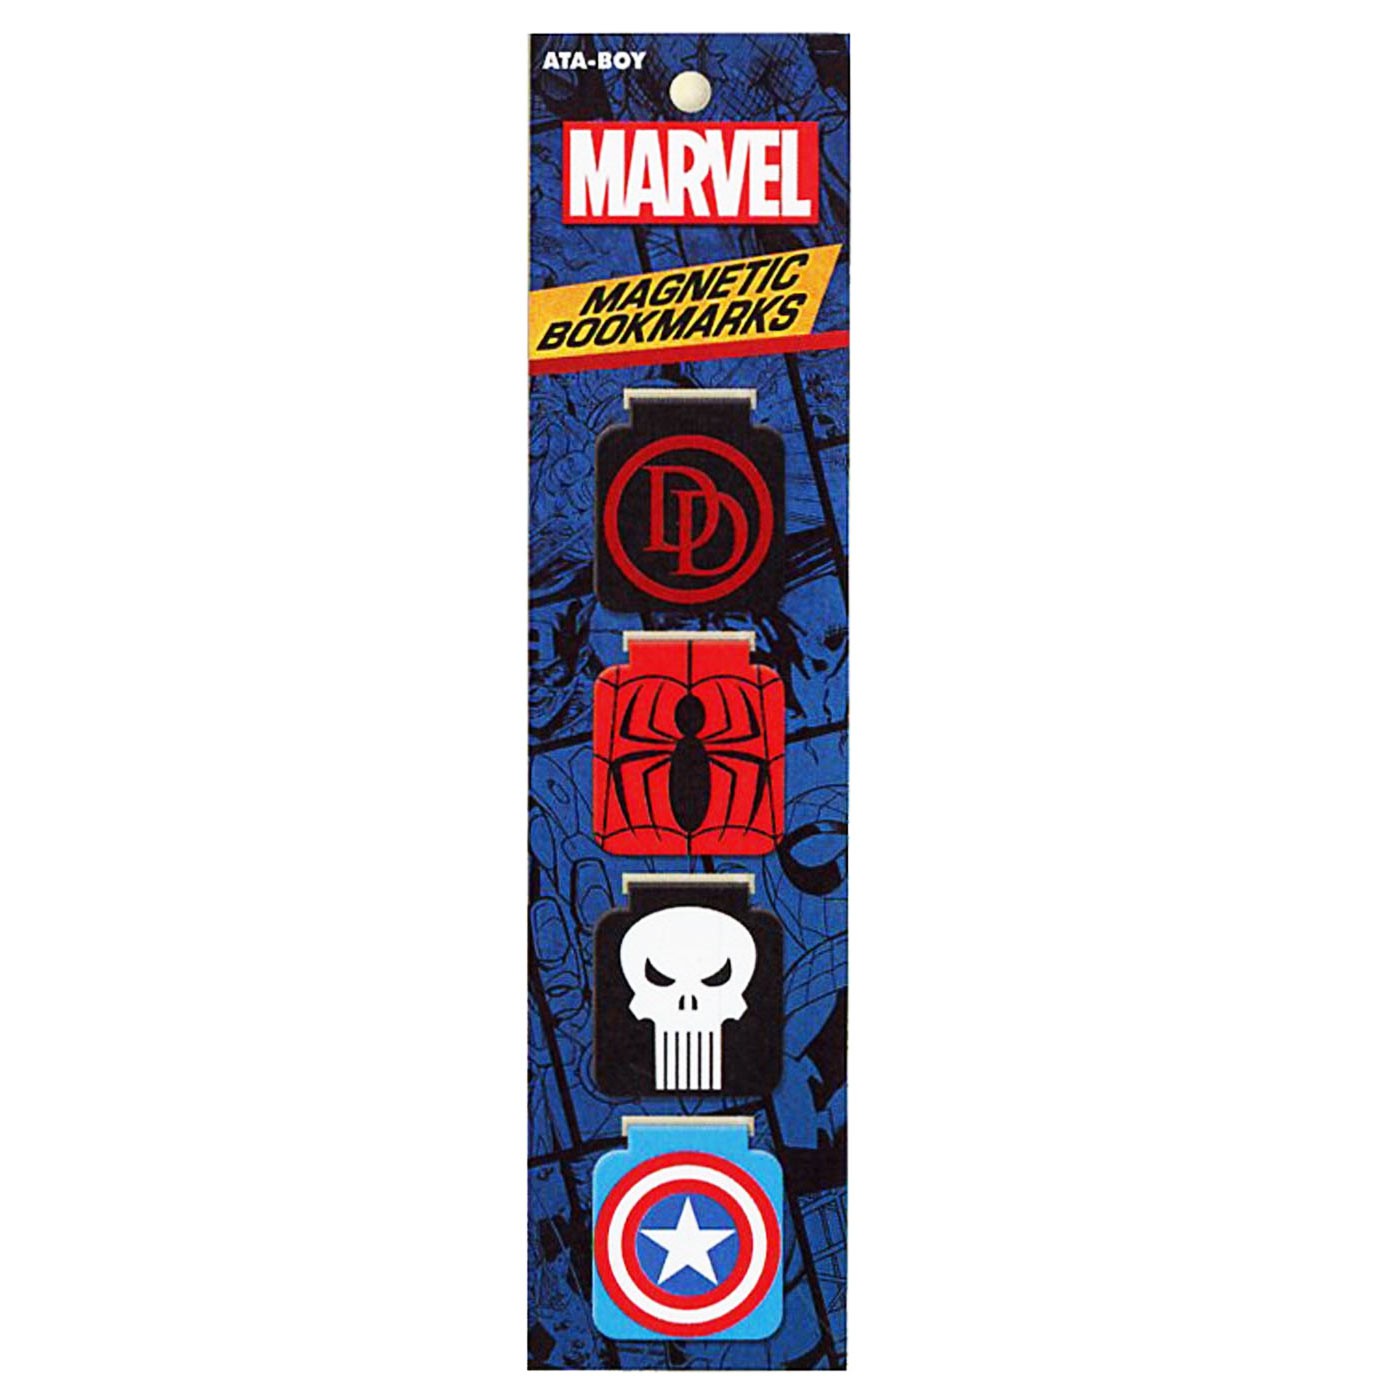 Marvel Comics Magnetic Bookmarks